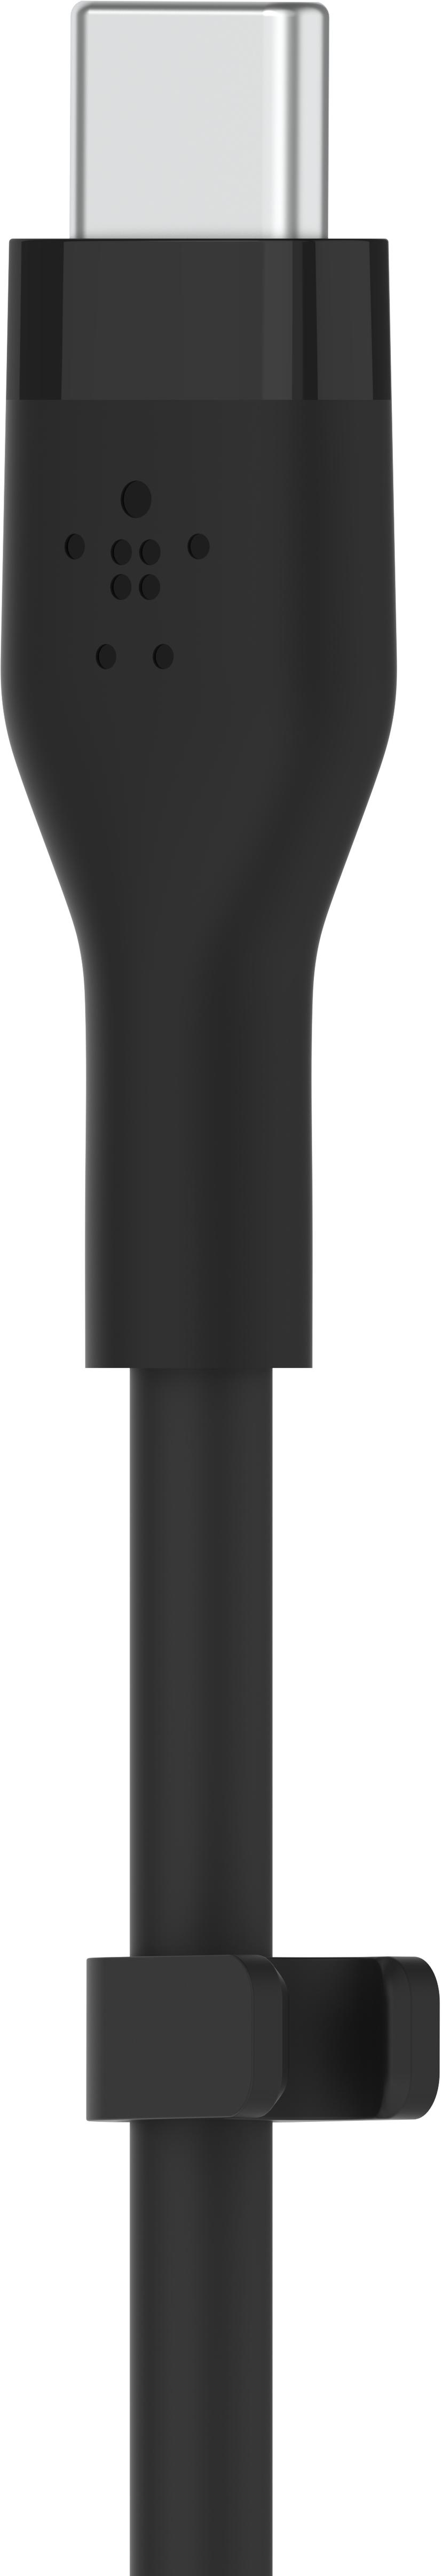 Belkin Flex USB-C to USB-C Cabel Silicone 3m USB C USB C